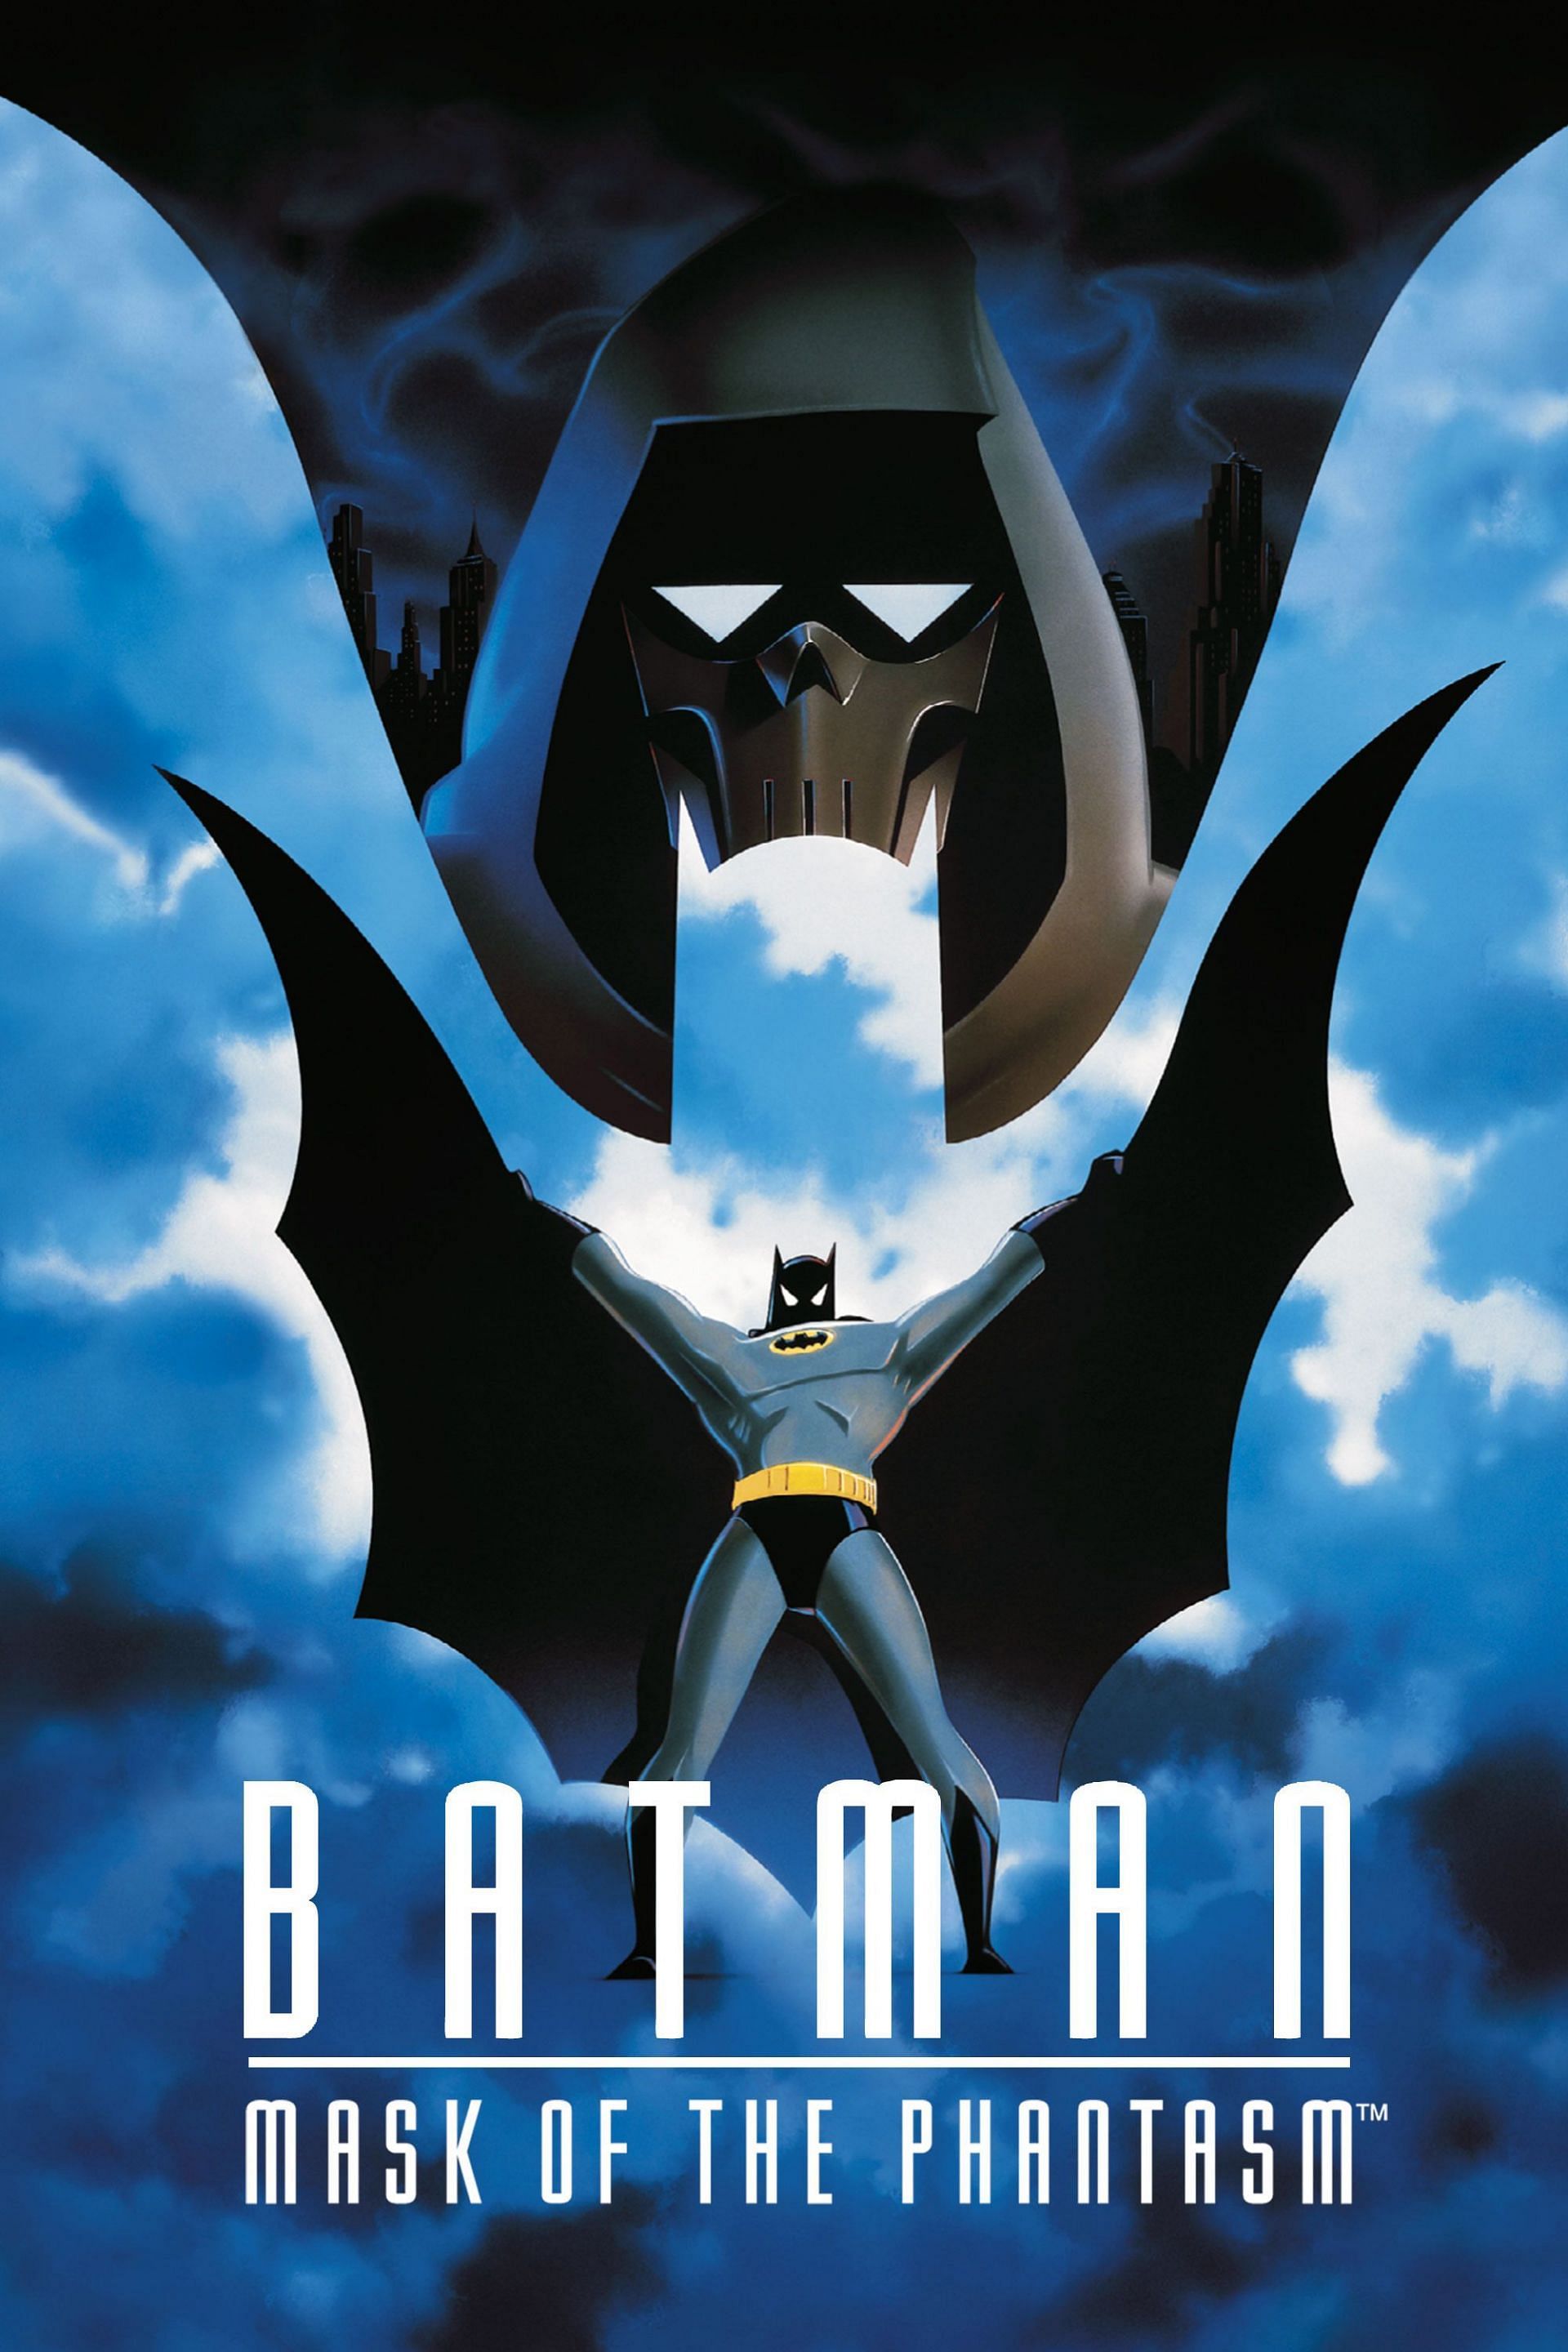 Batman: Mask of the Phantasm (Image via Warner Bros.)